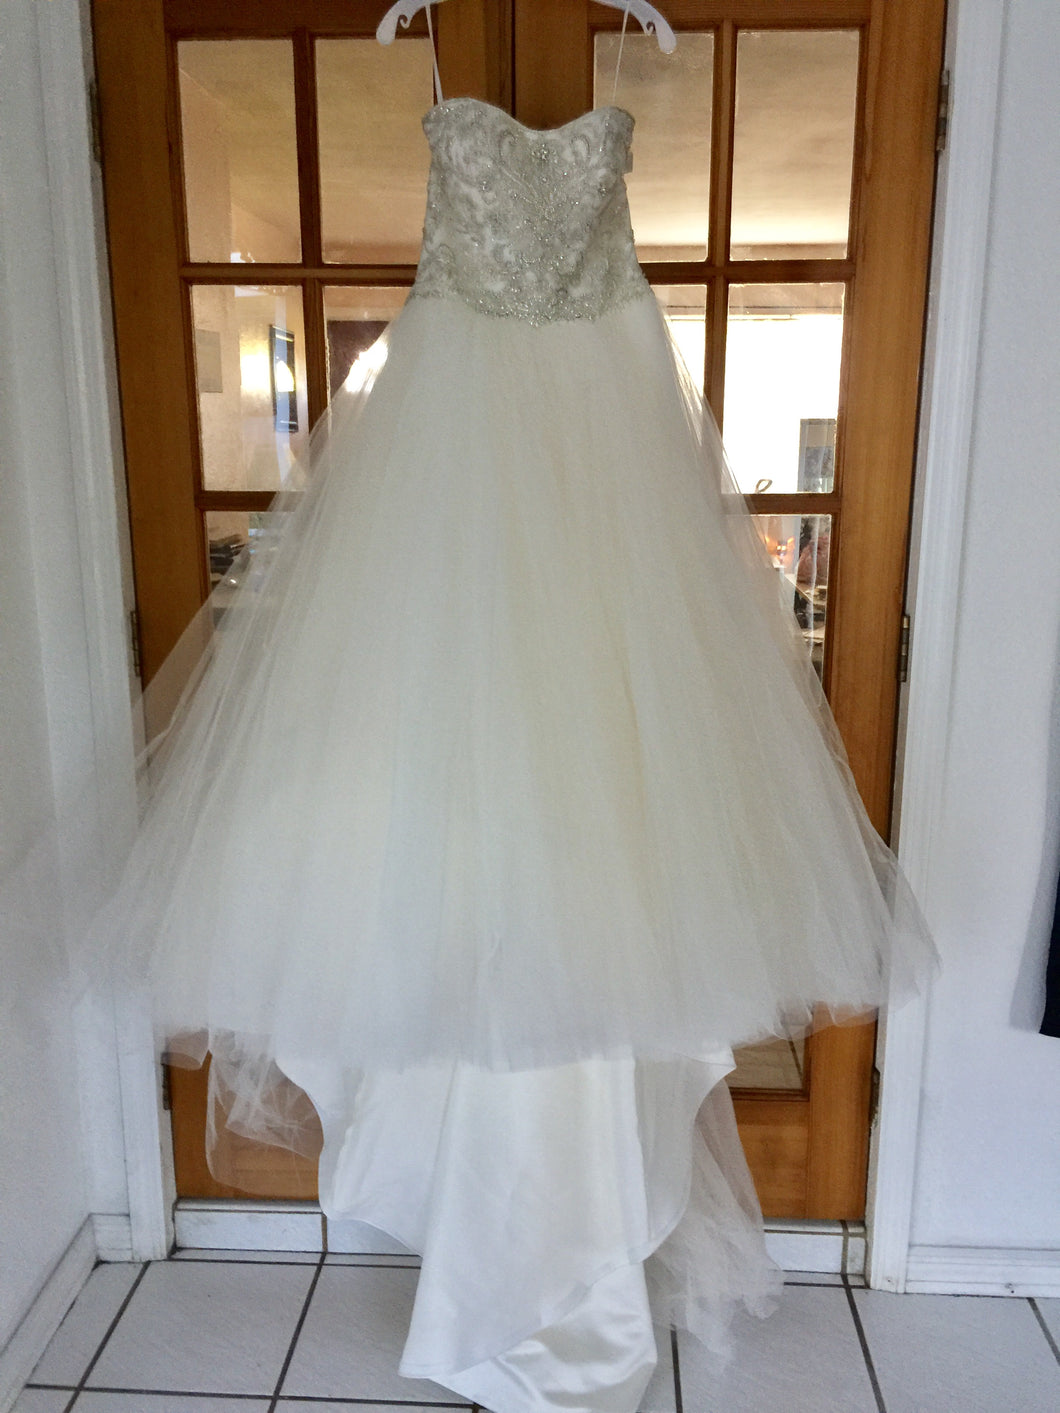 Casablanca 'Sea Breeze' size 6 new wedding dress front view on hanger